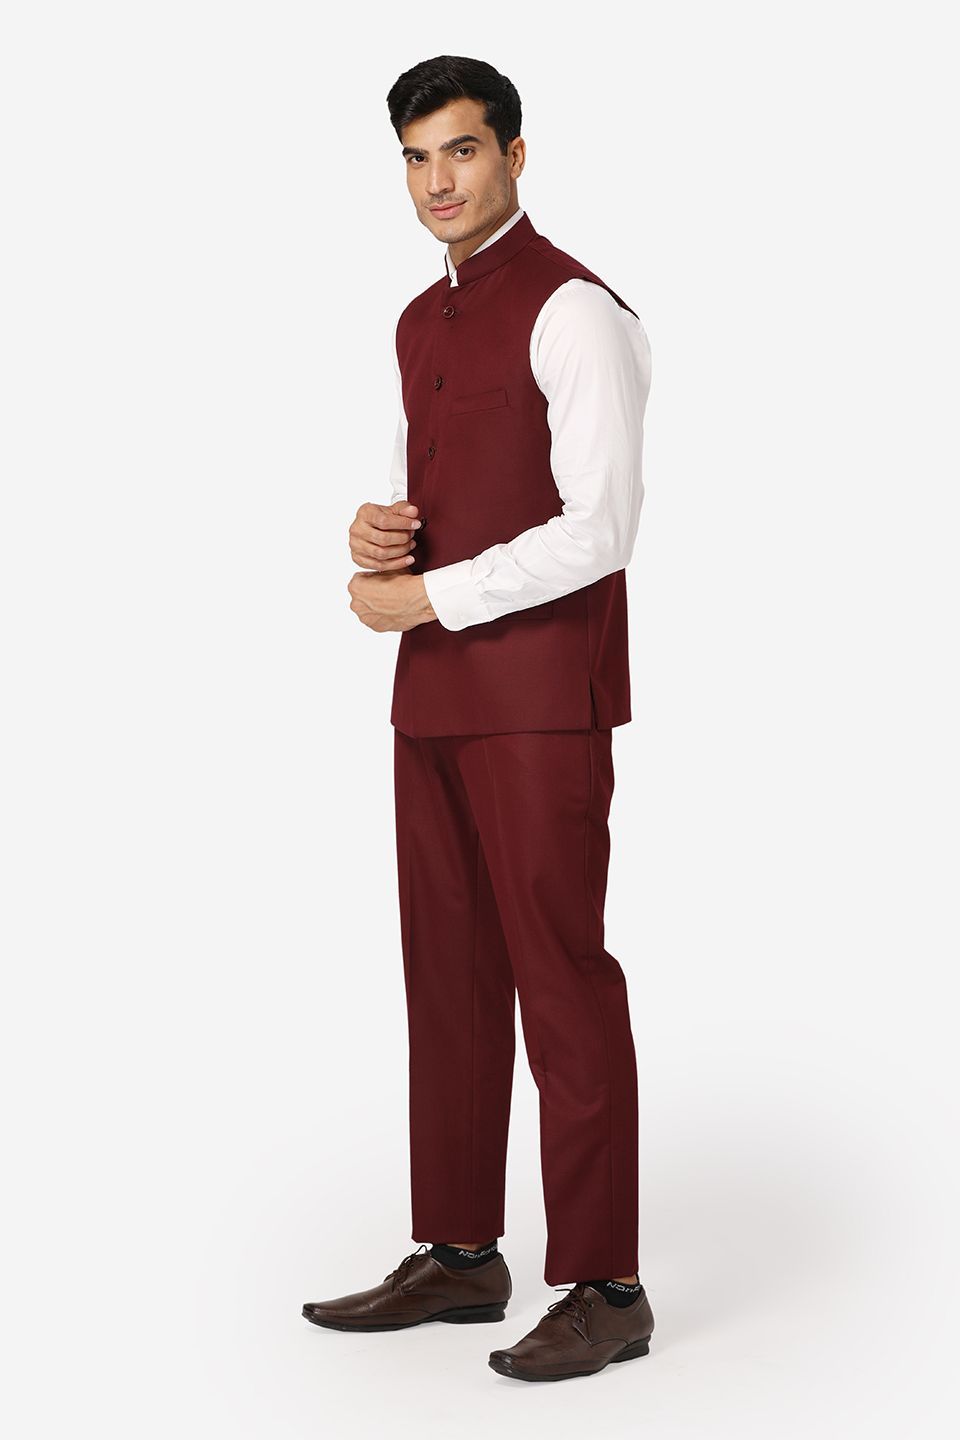 WINTAGE Men's Poly Cotton Casual and Evening Vest & Pant Set : Purple